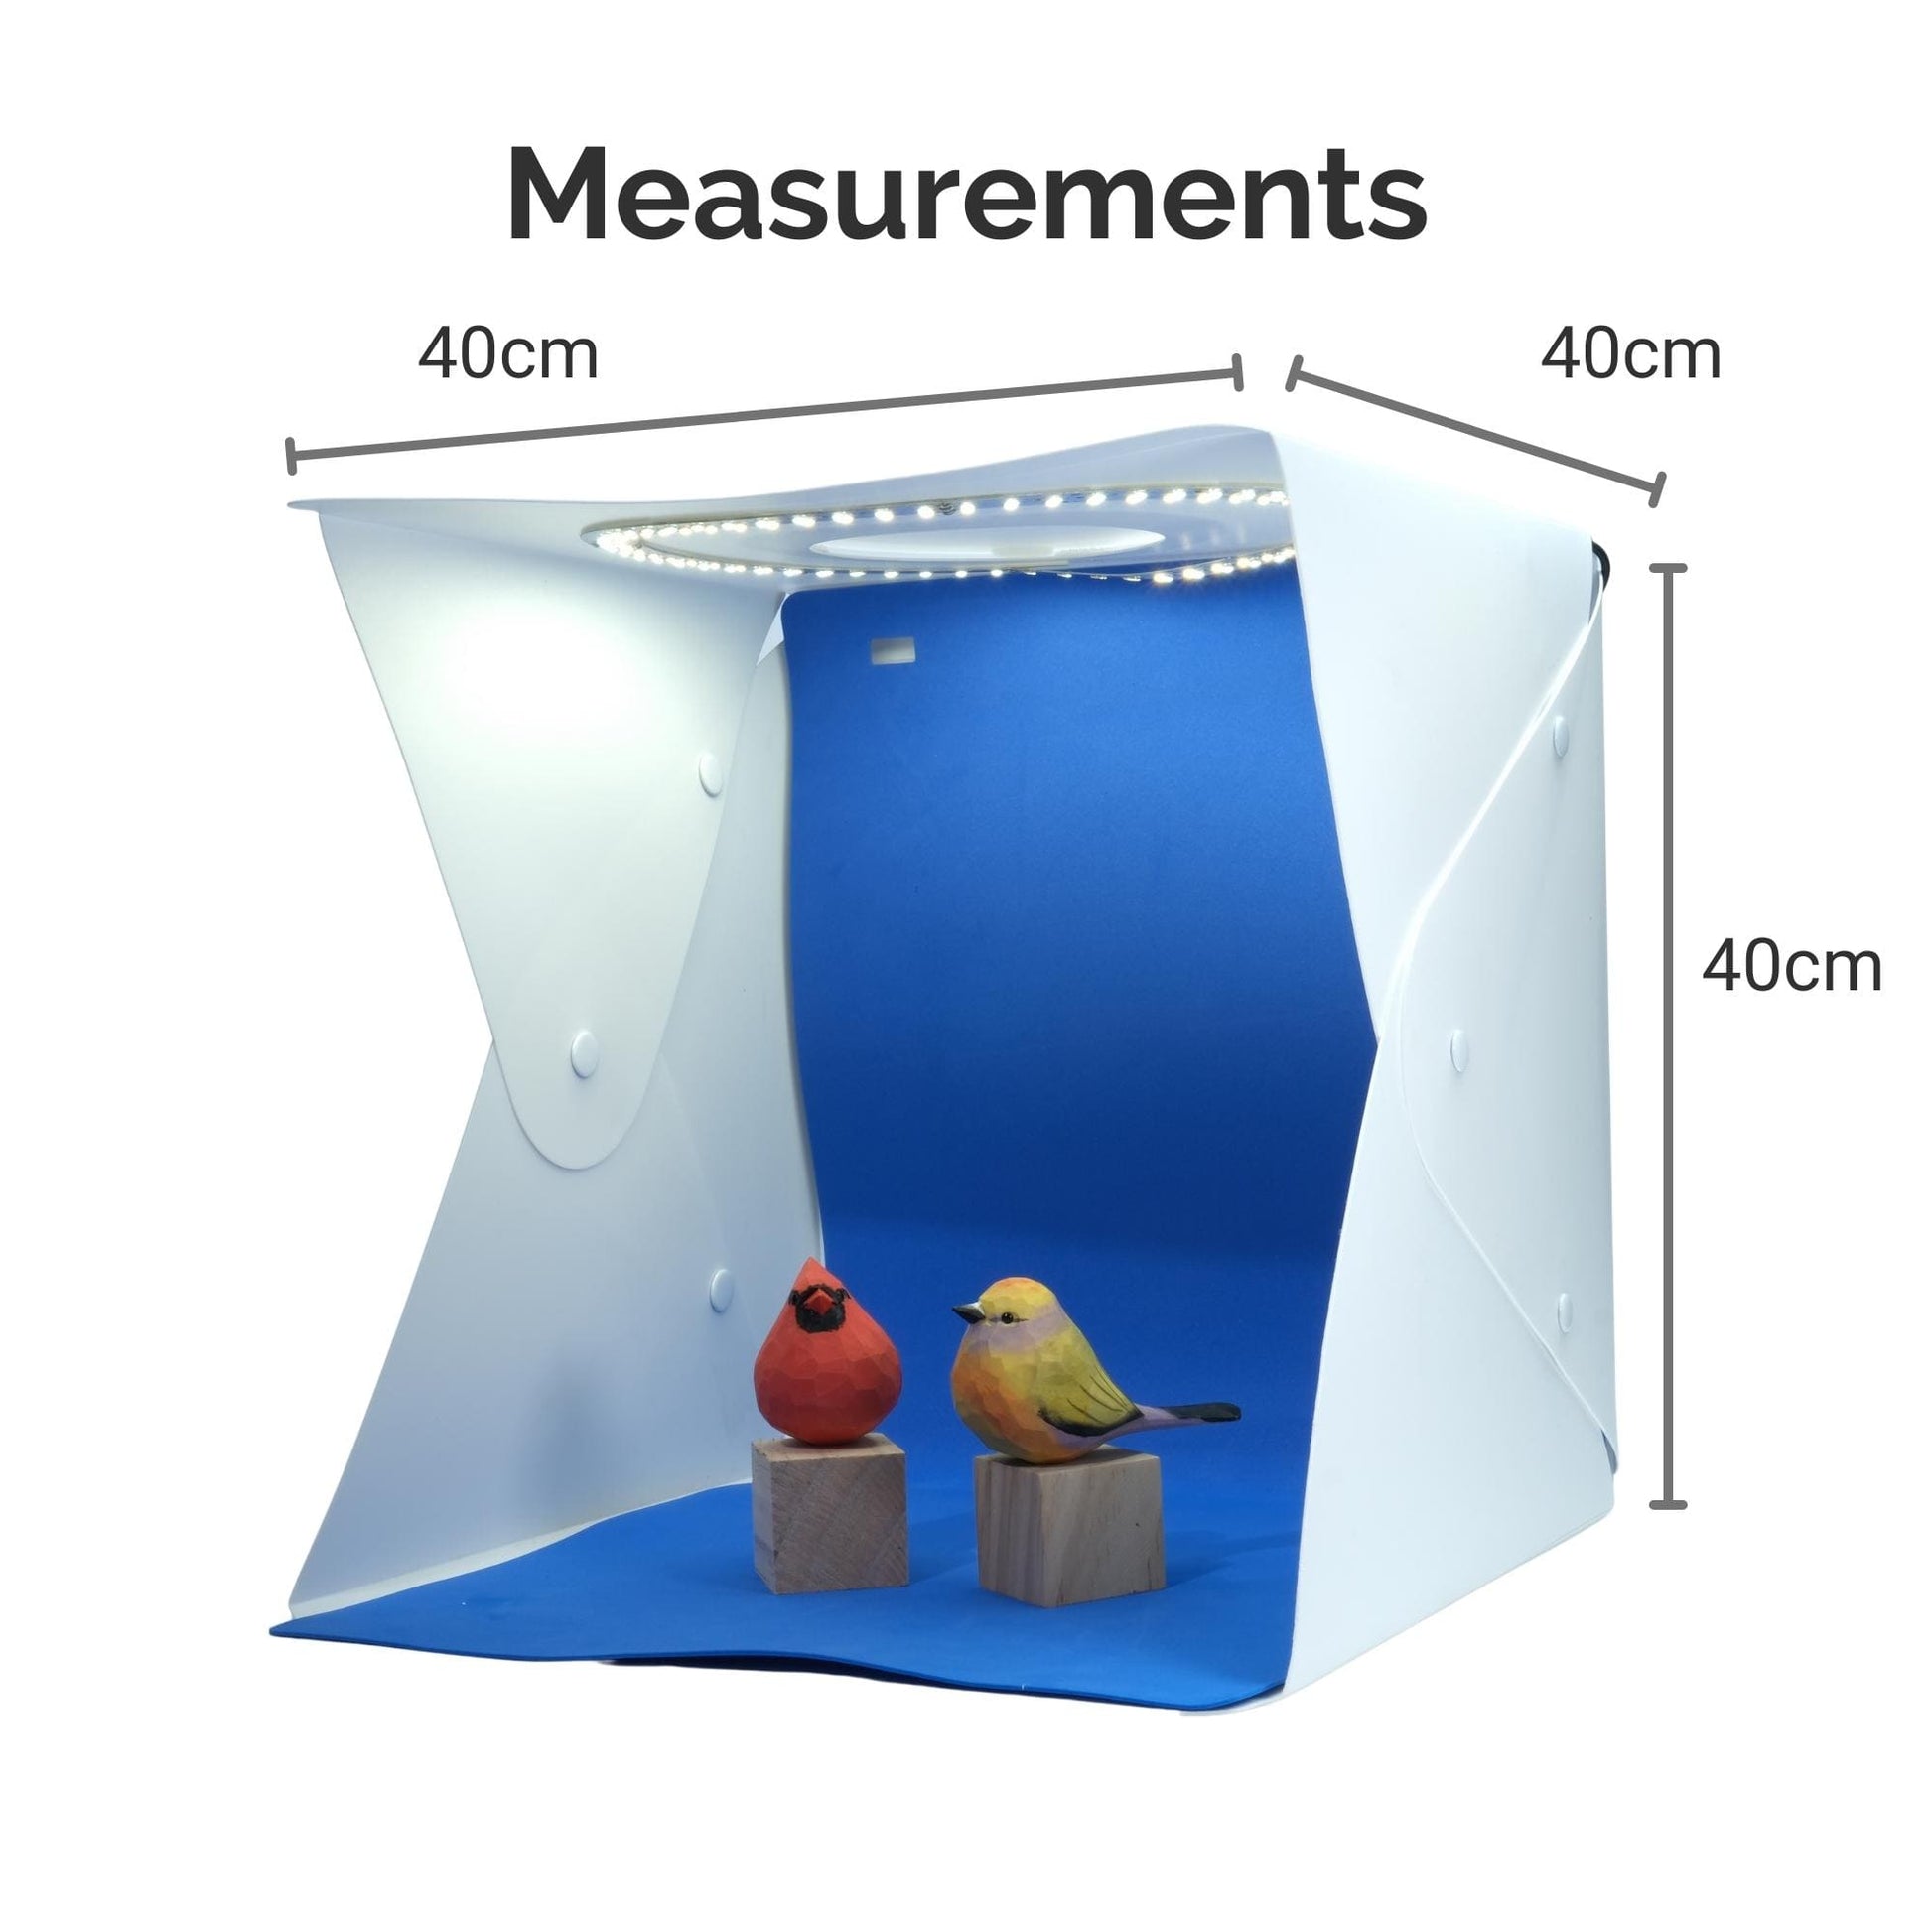 40cm Photo Studio Light Box Product Photos Measurements